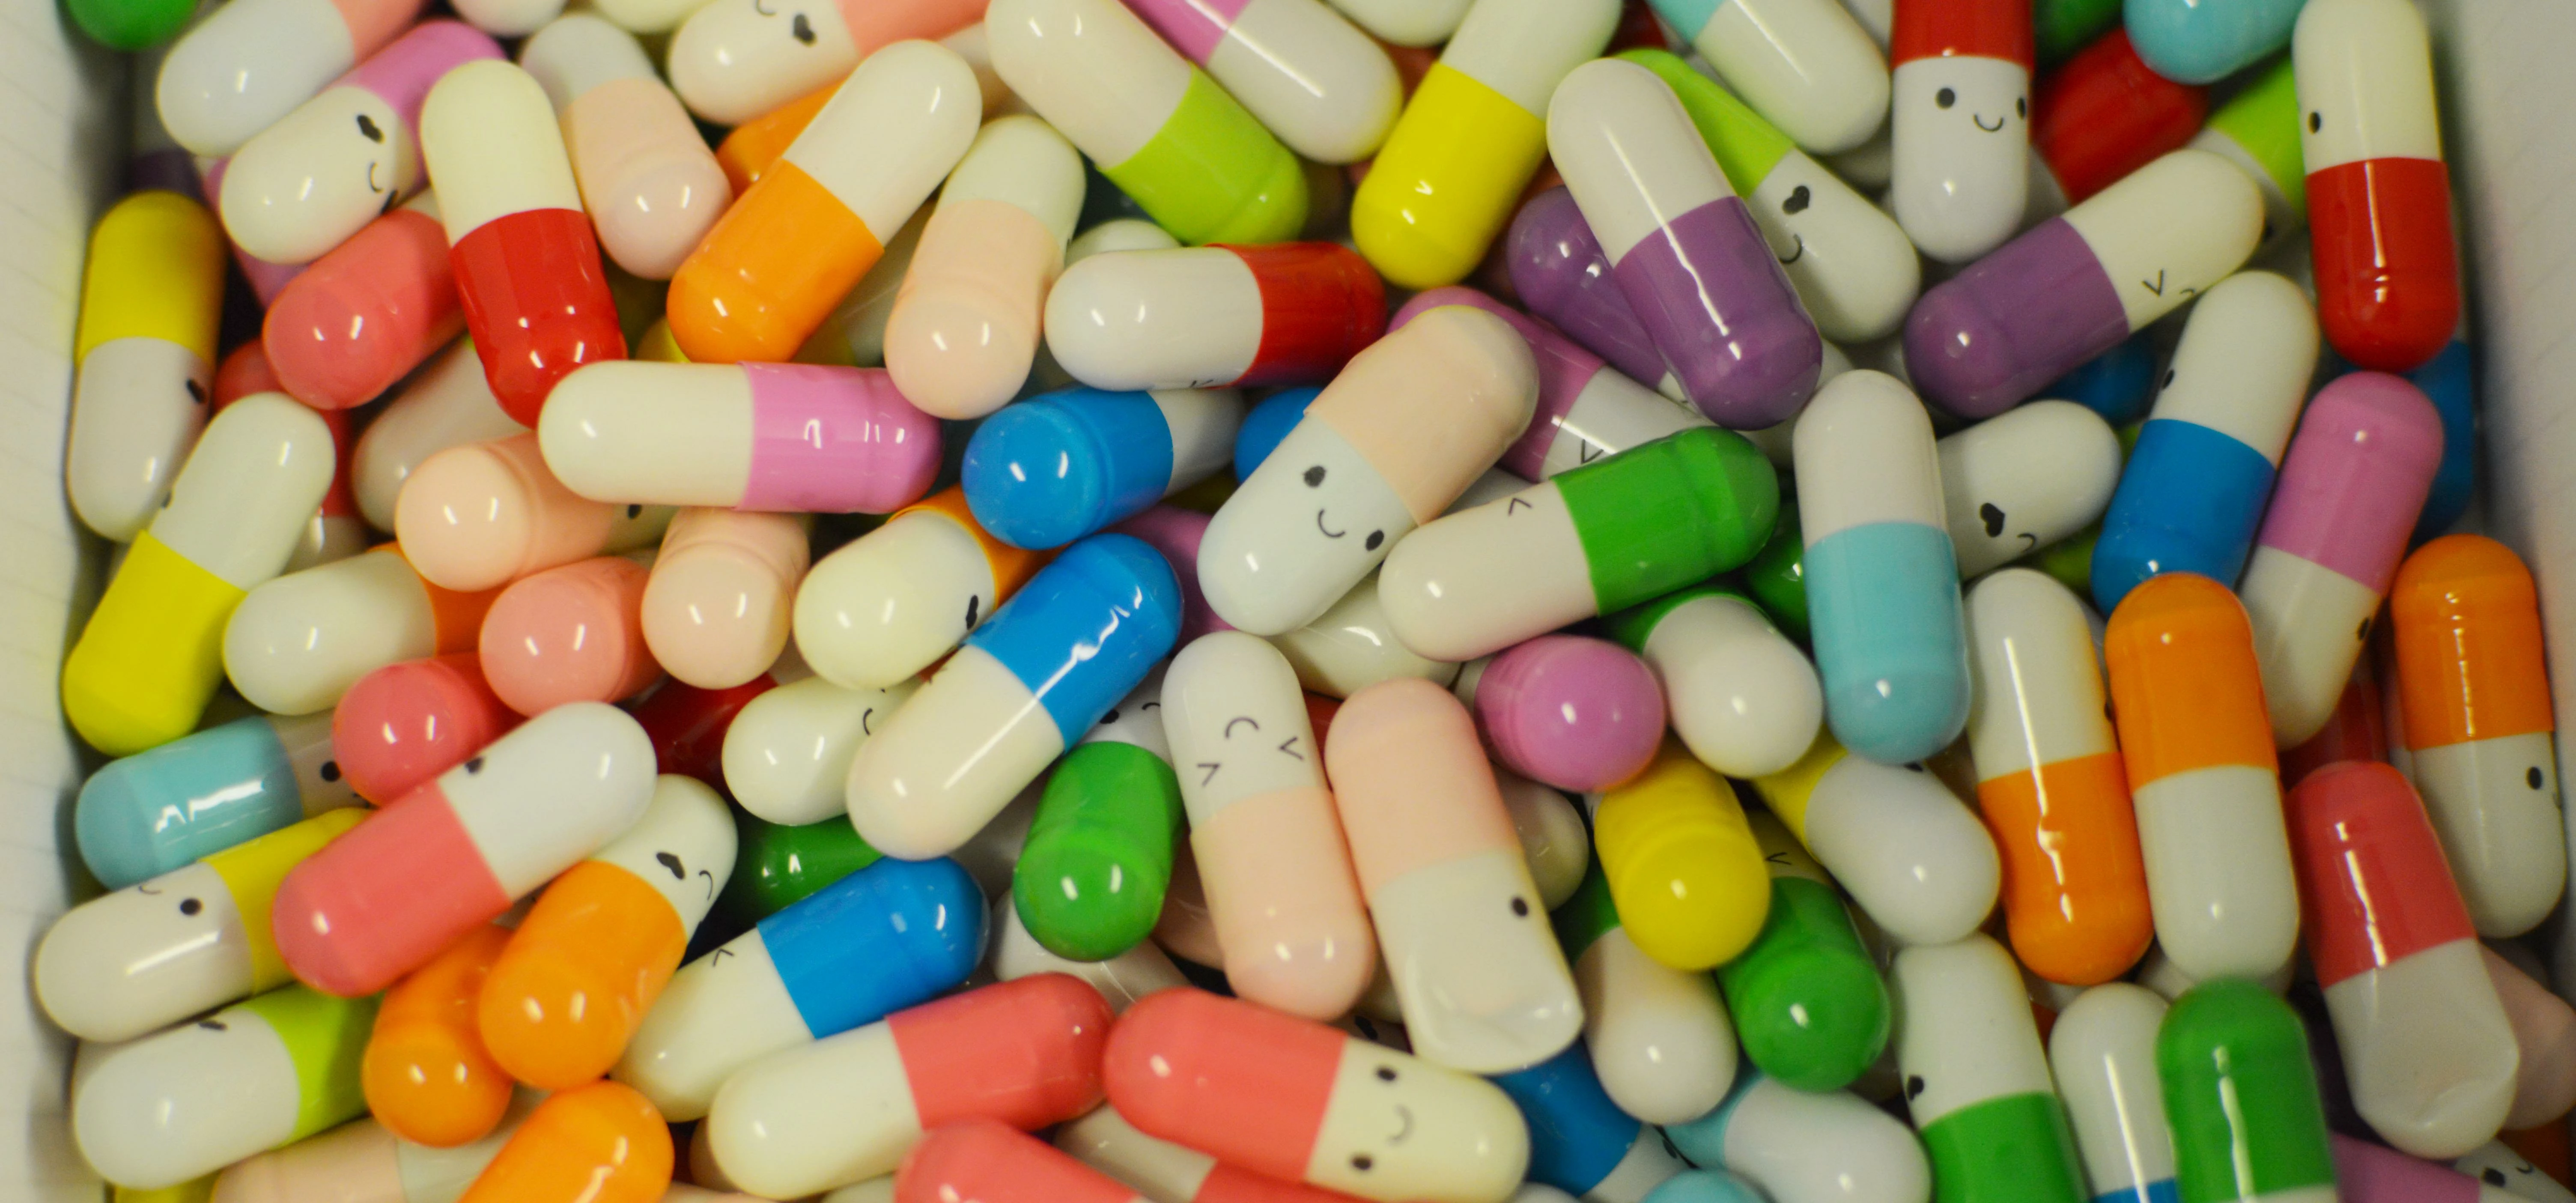 Colourful Pills